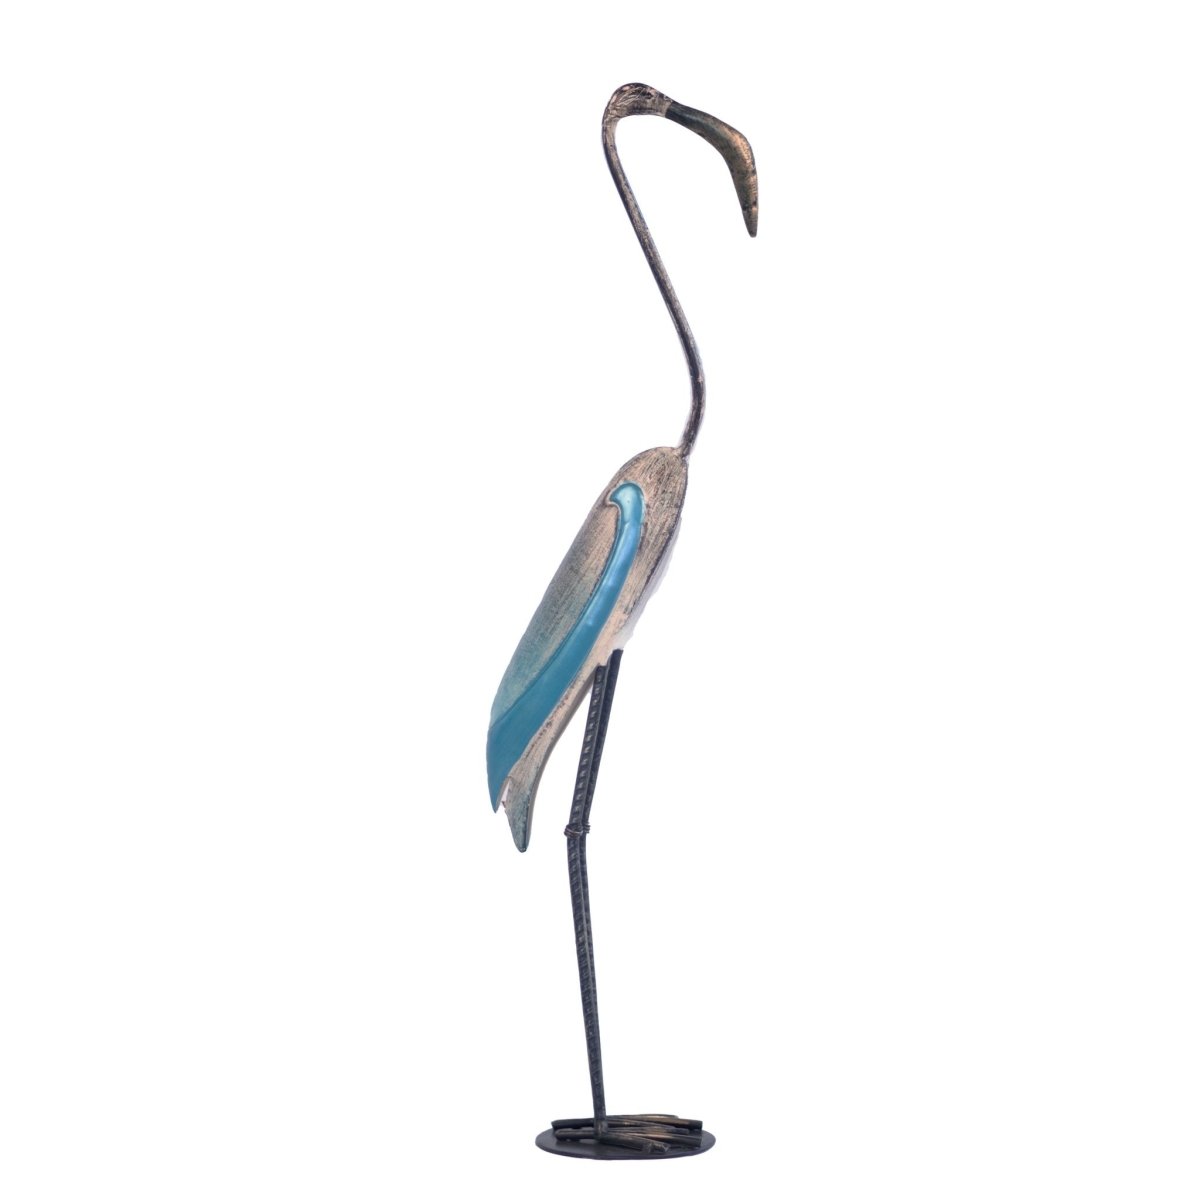 Kezevel Metal Birds Table Decor - Bird Figurines Statue in Antique Golden and Blue Finish, Metal Showpiece for Home Decor